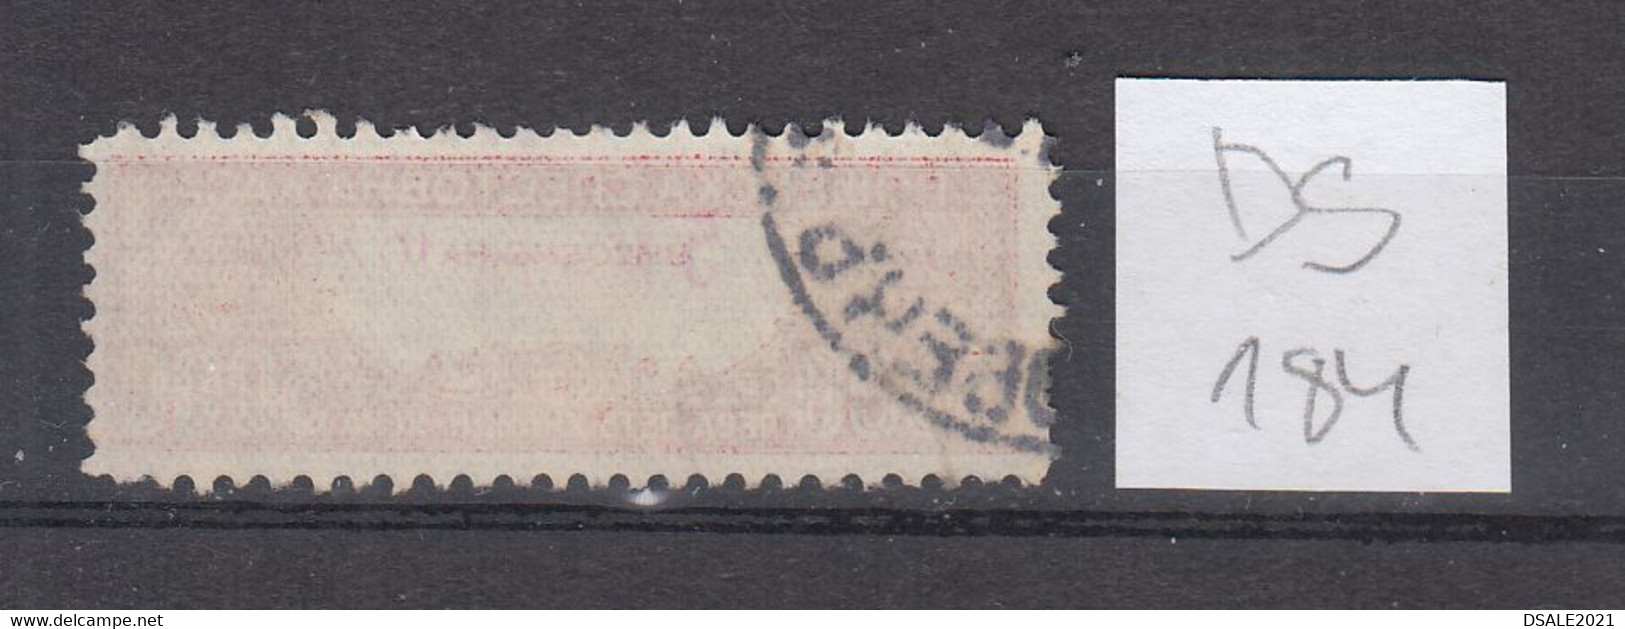 Bulgaria Bulgarie Bulgarije 1930s/40s Postal Savings Bank Contribution Fee 5000Lv. Fiscal Revenue Stamp (ds184) - Dienstmarken